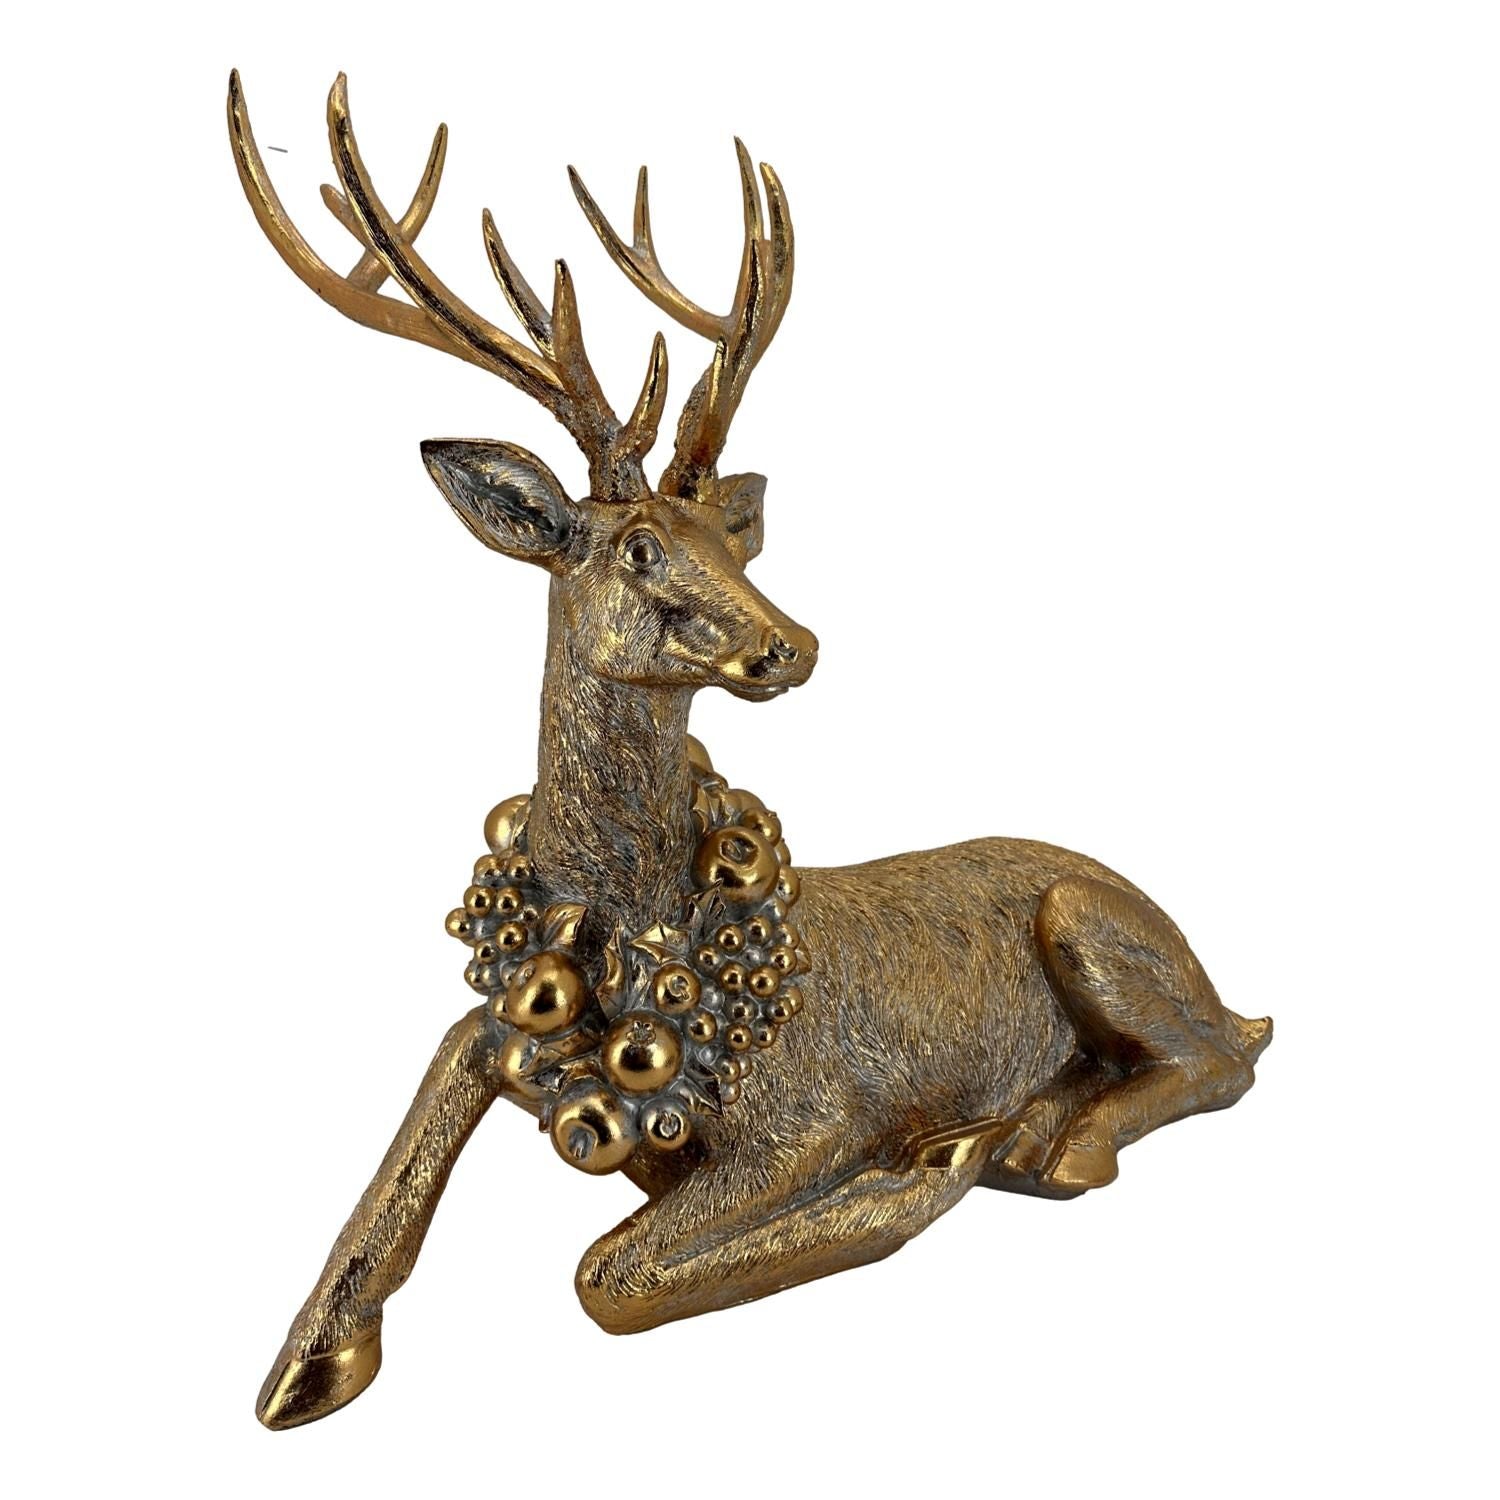 Gold Sitting Deer -72cm - My Christmas